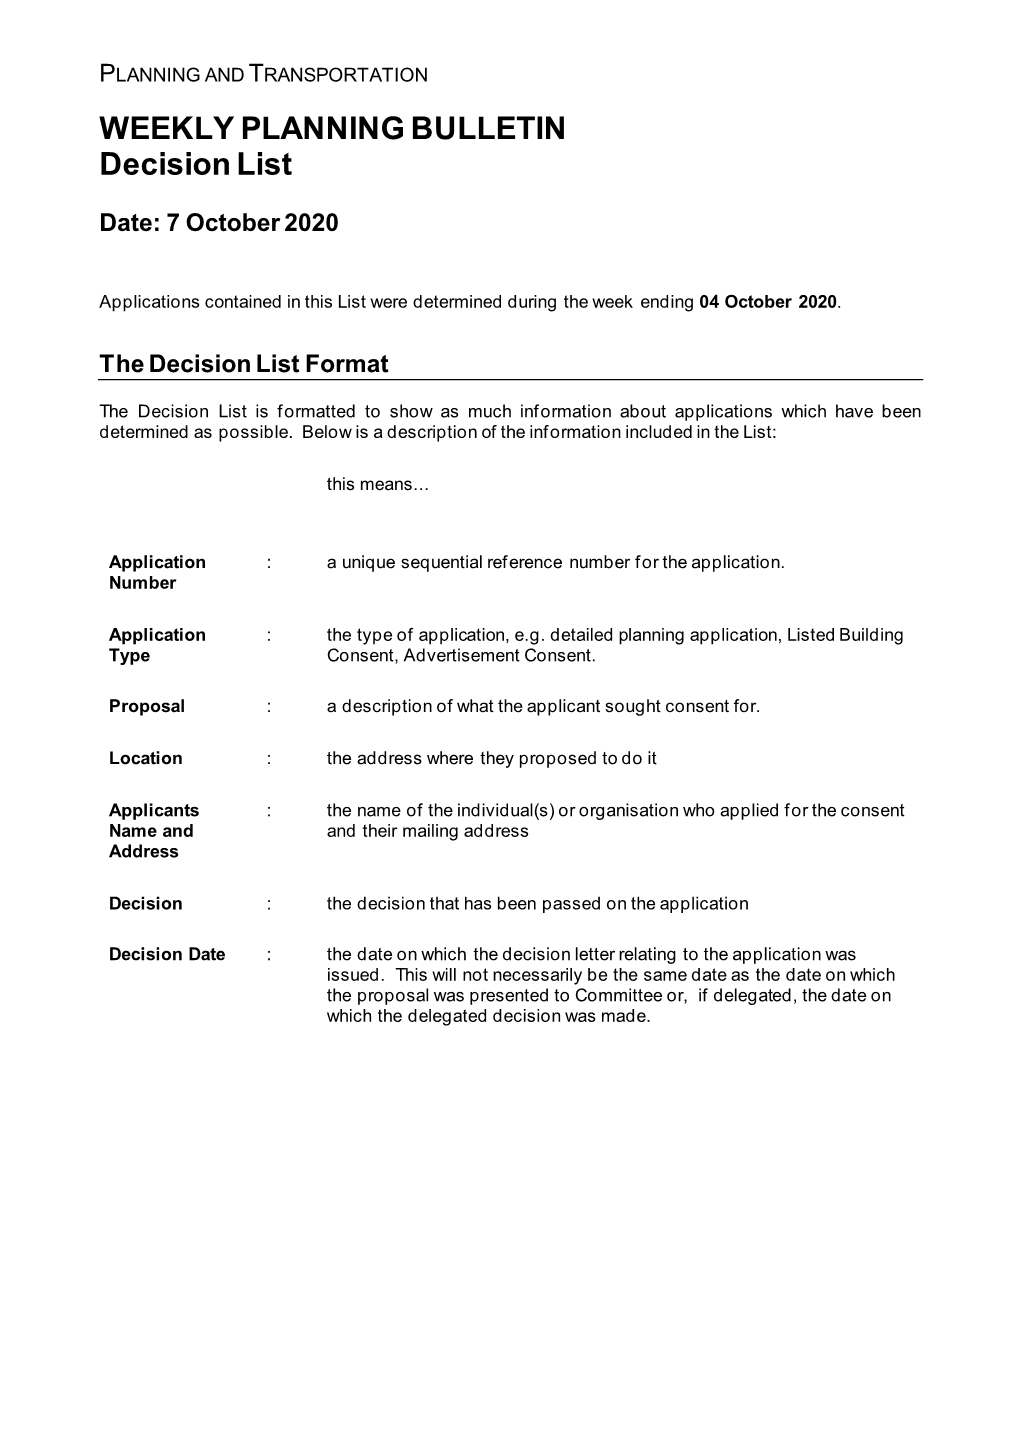 Planning Applications Determined 04 October 2020